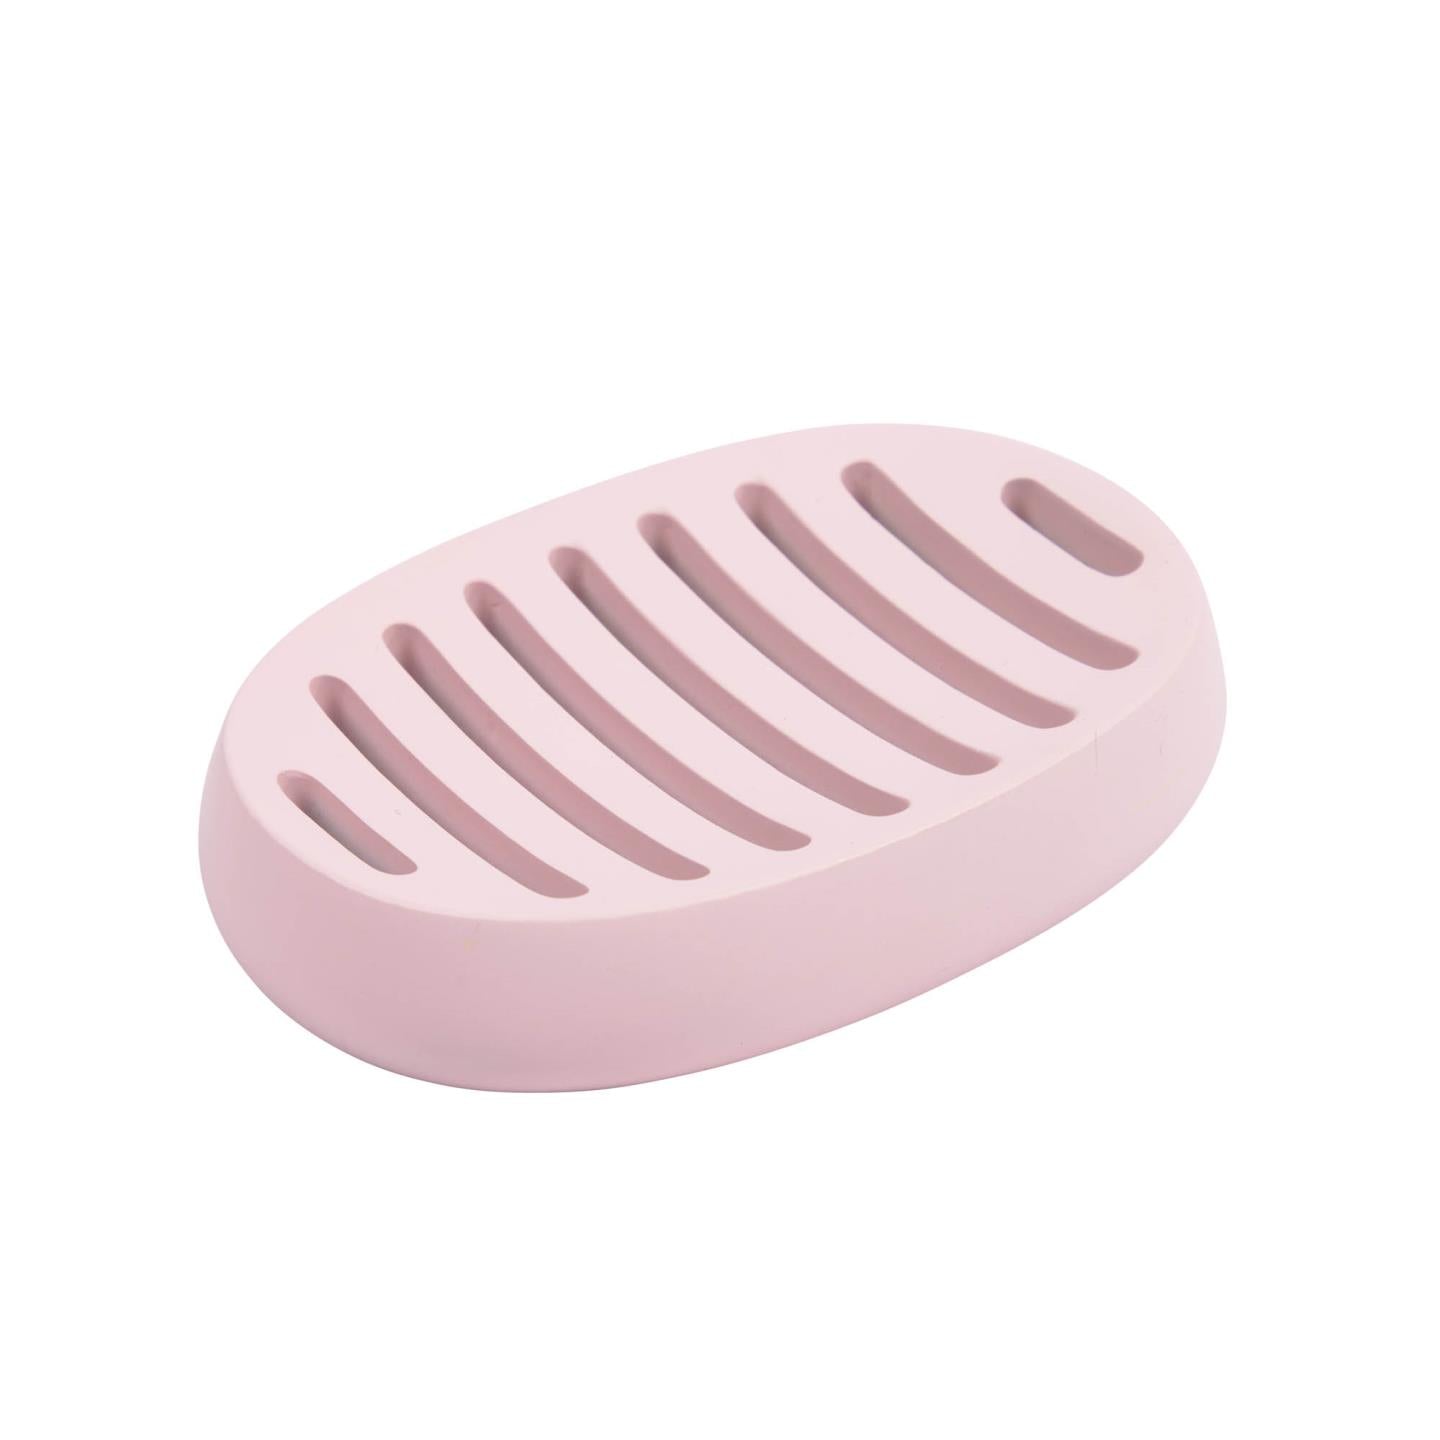 Chia pink polyresin soap dish